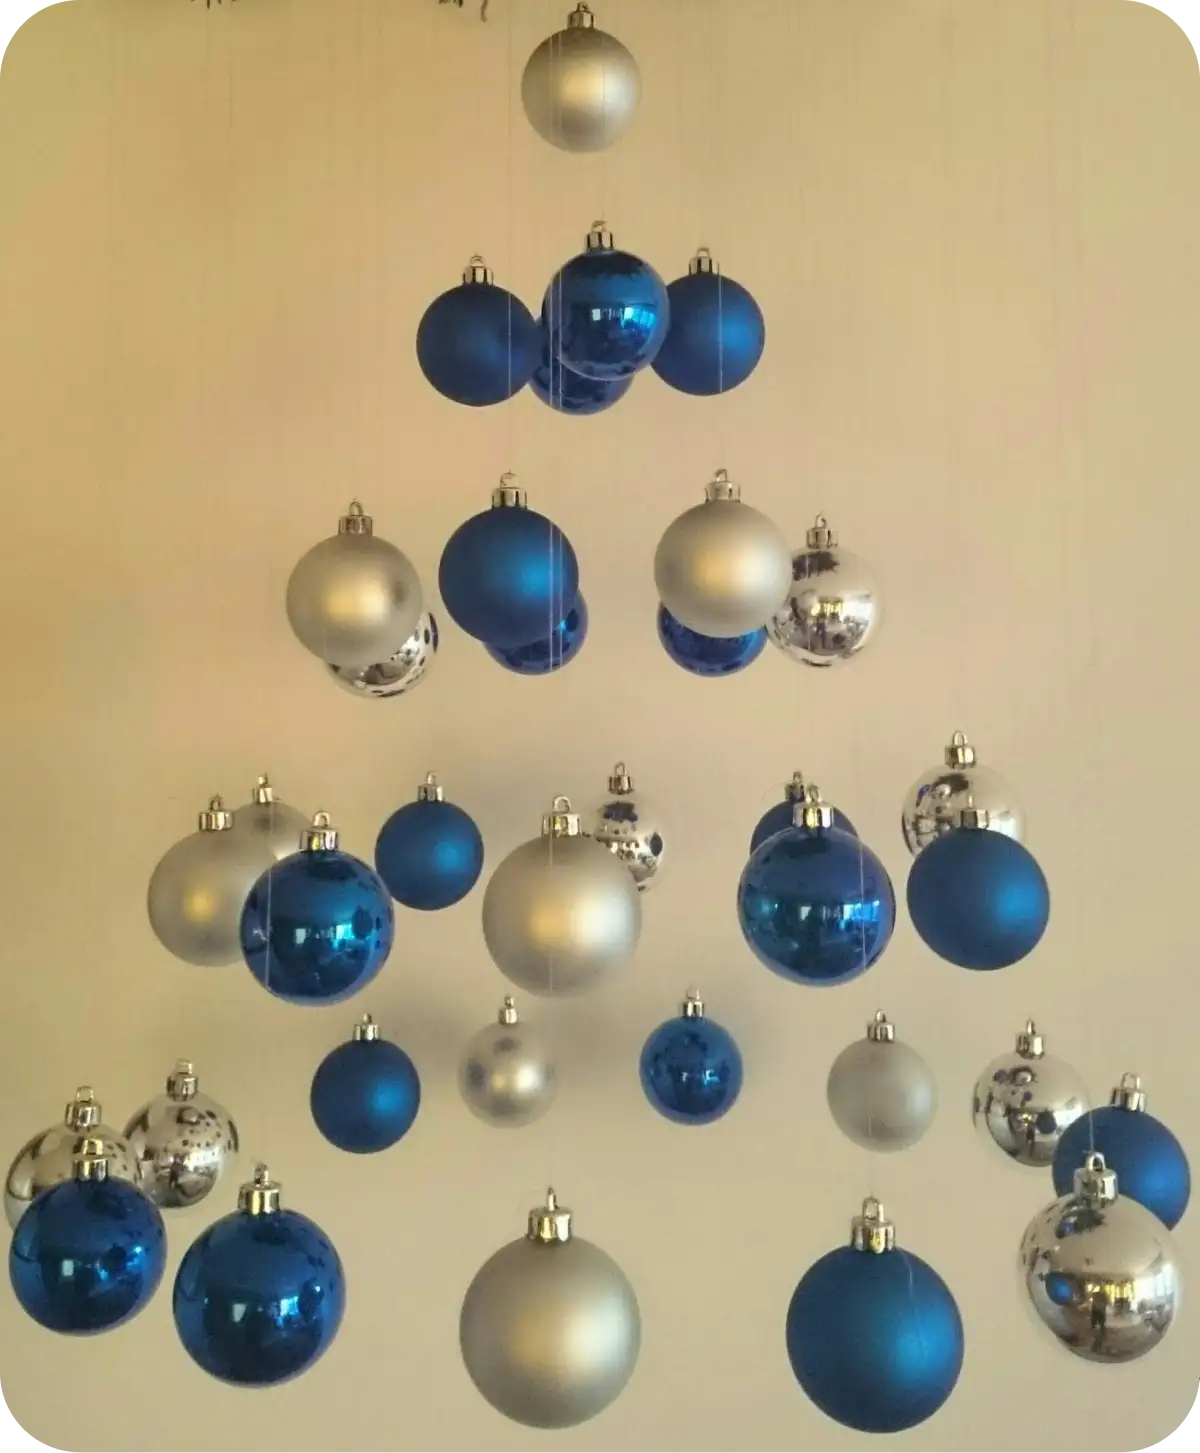 Innovative Christmas Tree Alternatives Ideas (for Small Spaces)